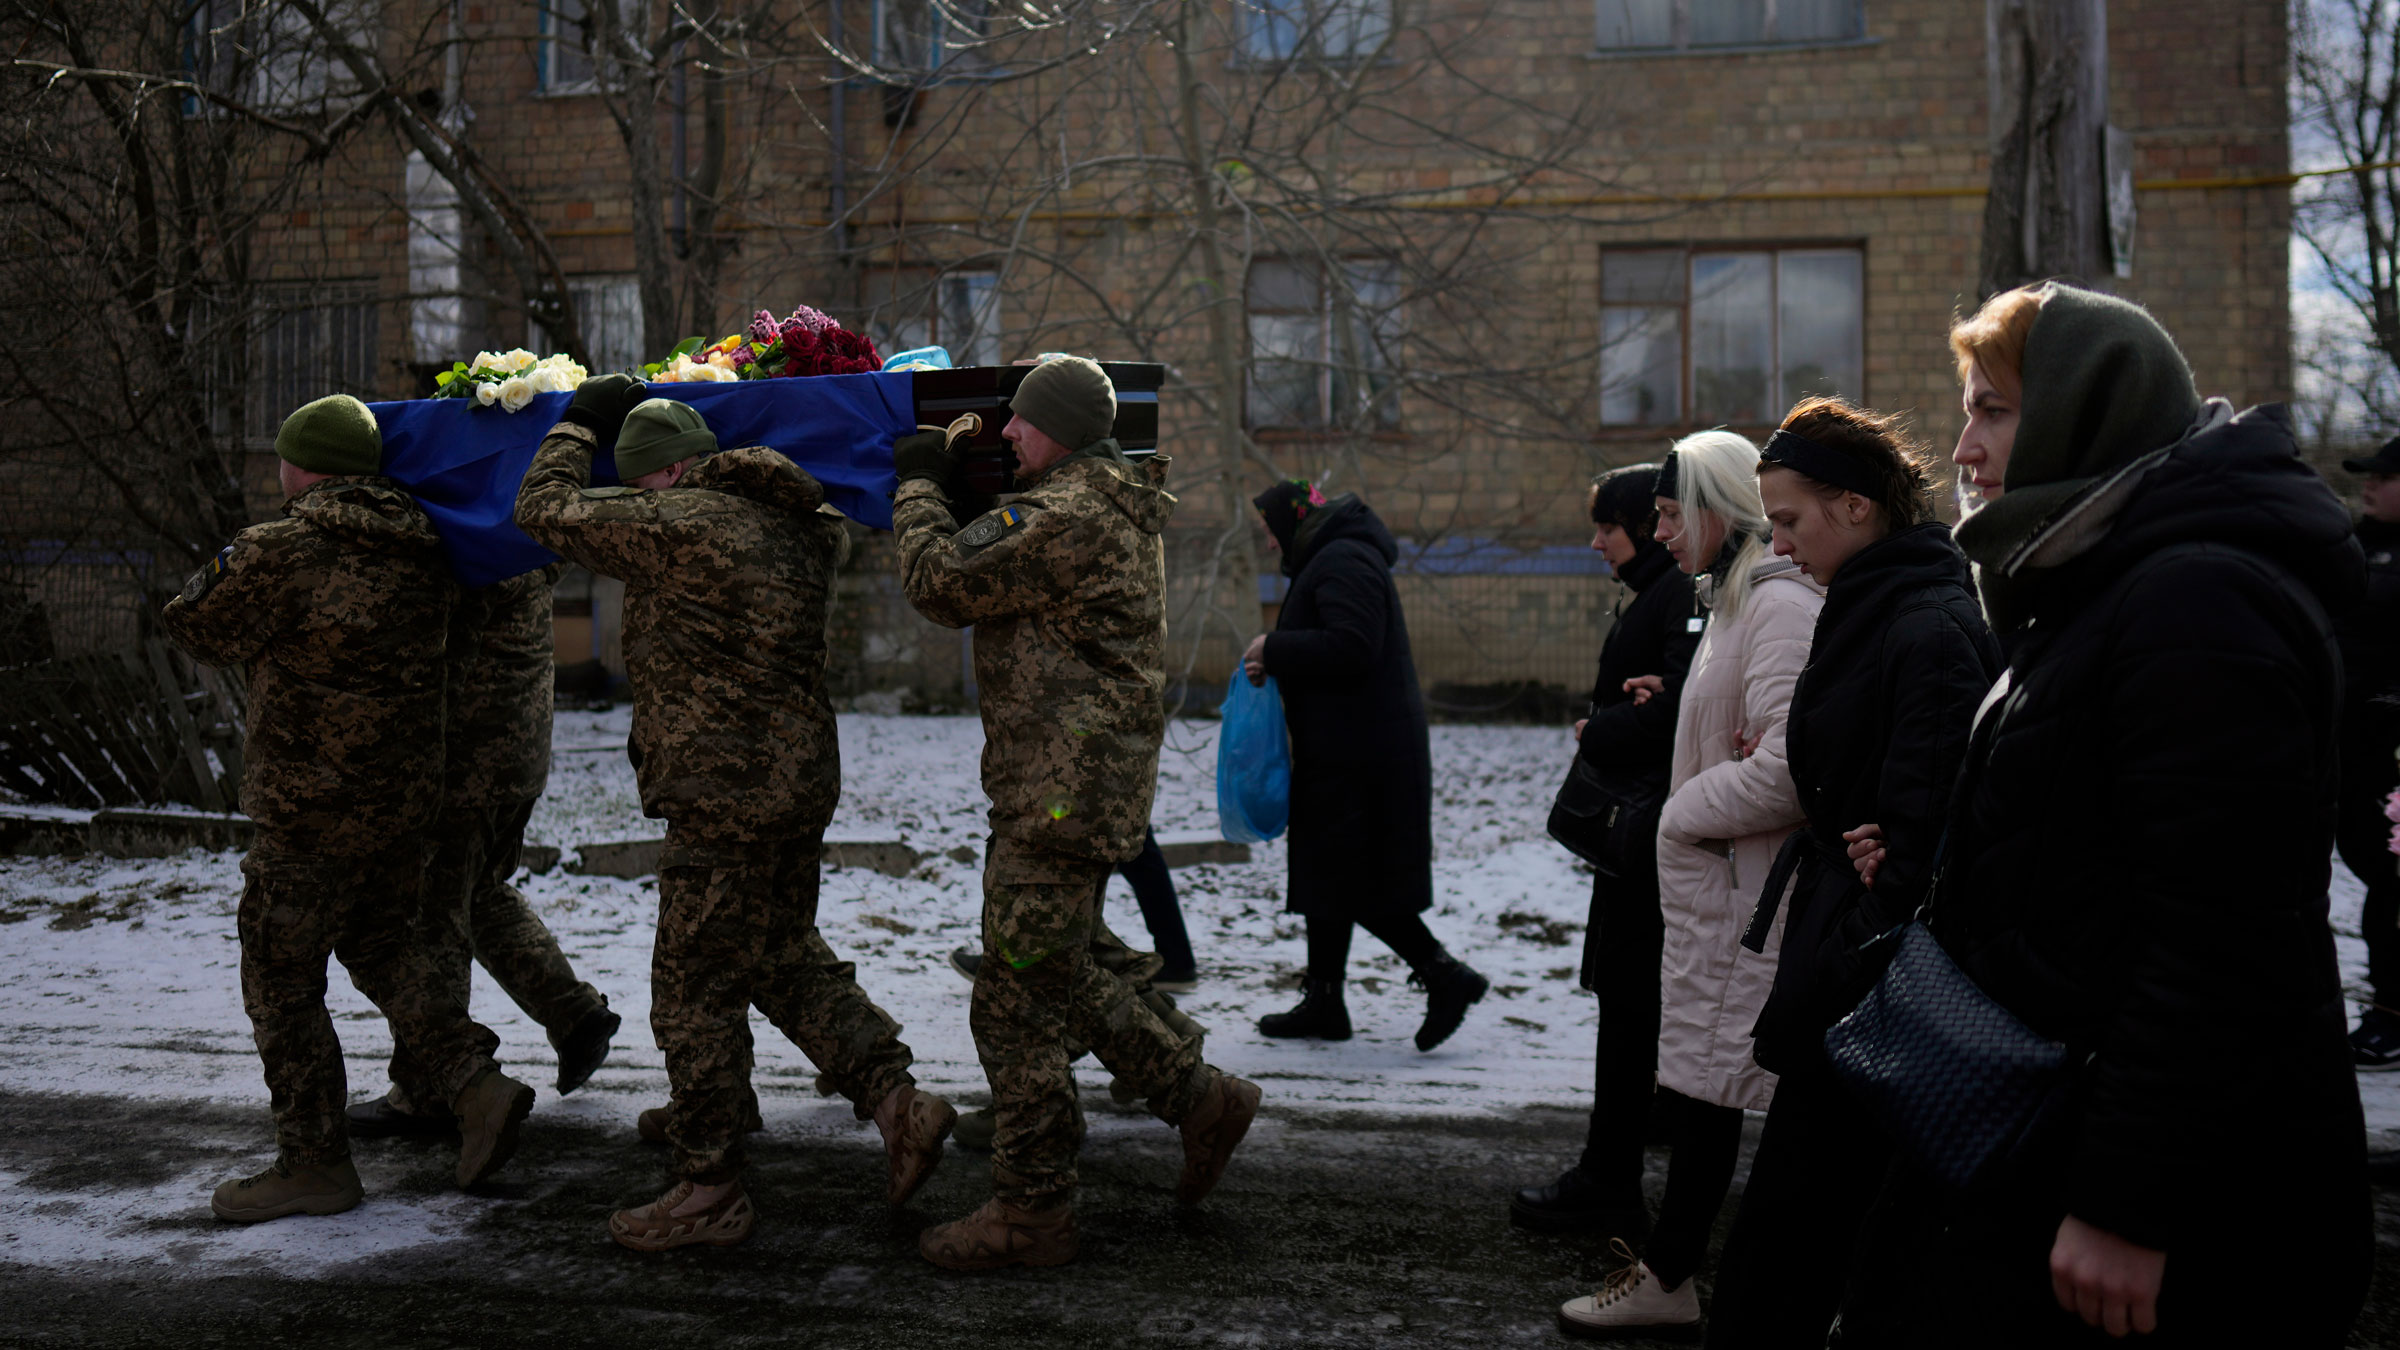 Ukrainian soldiers carry the coffin of paratrooper Vladyslav Bondarenko during his funeral in Kozyntsi, Ukraine, on Monday. Bondarenko, 26, died near Bakhmut on February 26.